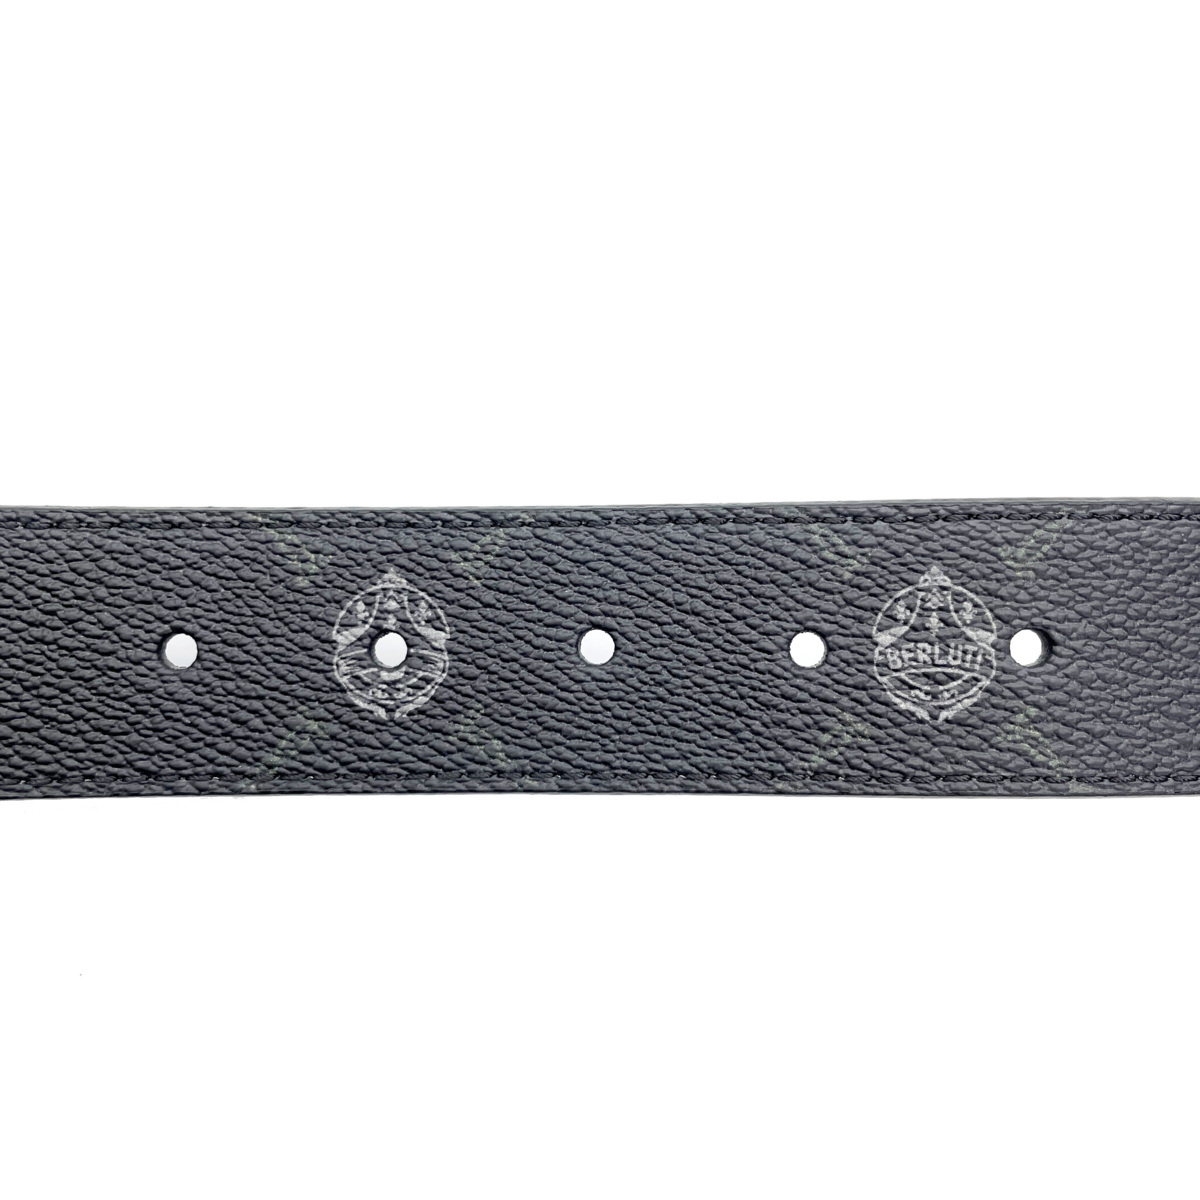 # 1 jpy ~ beautiful goods # BERLUTI Berluti # signature canvas belt 35mm black C0065-003 TOILE # leather silver buckle 